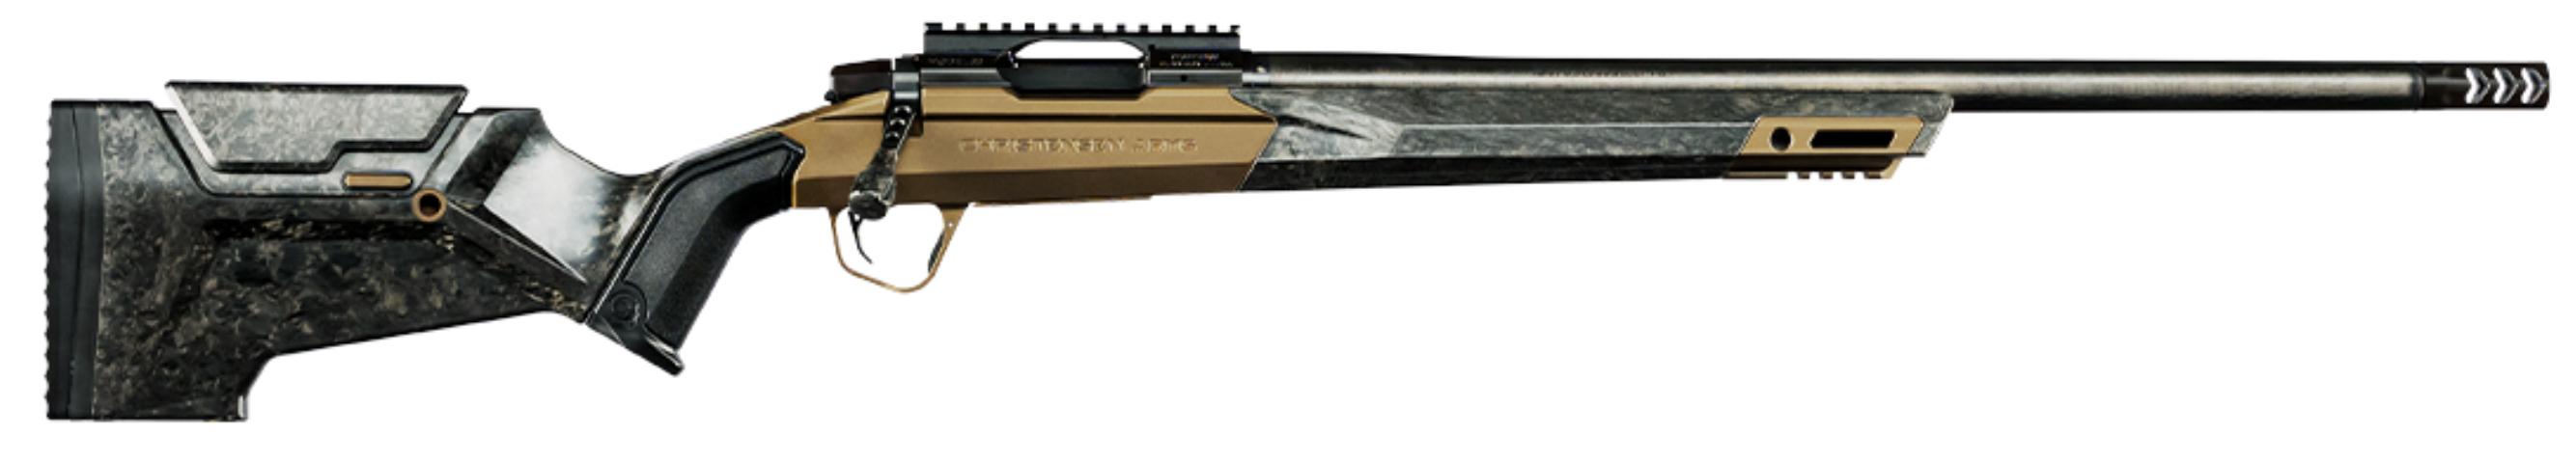 Modern Hunting Rifle (MHR)